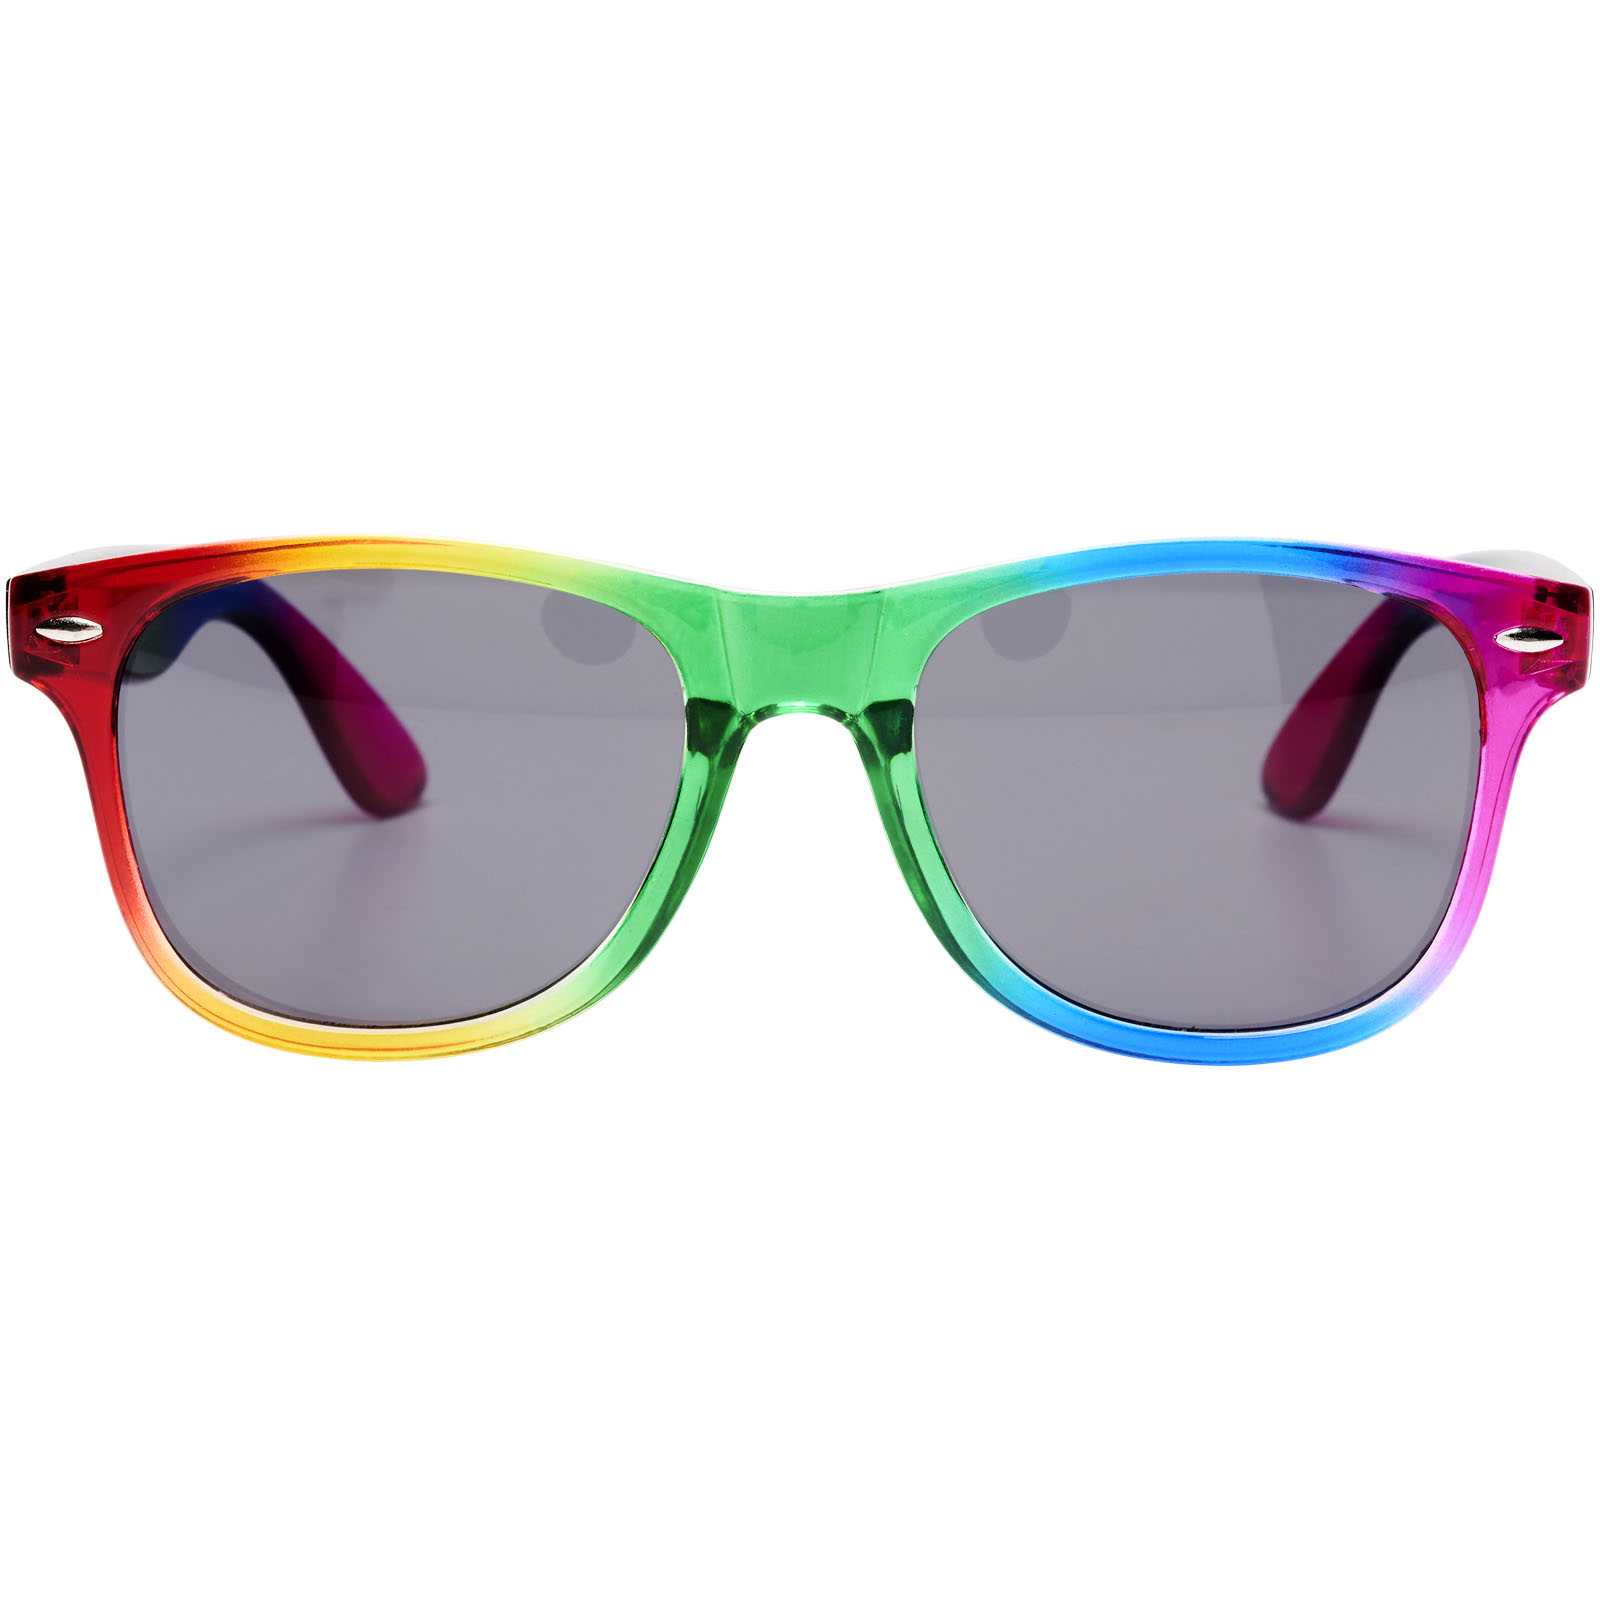 Advertising Sunglasses - Sun Ray rainbow sunglasses - 1